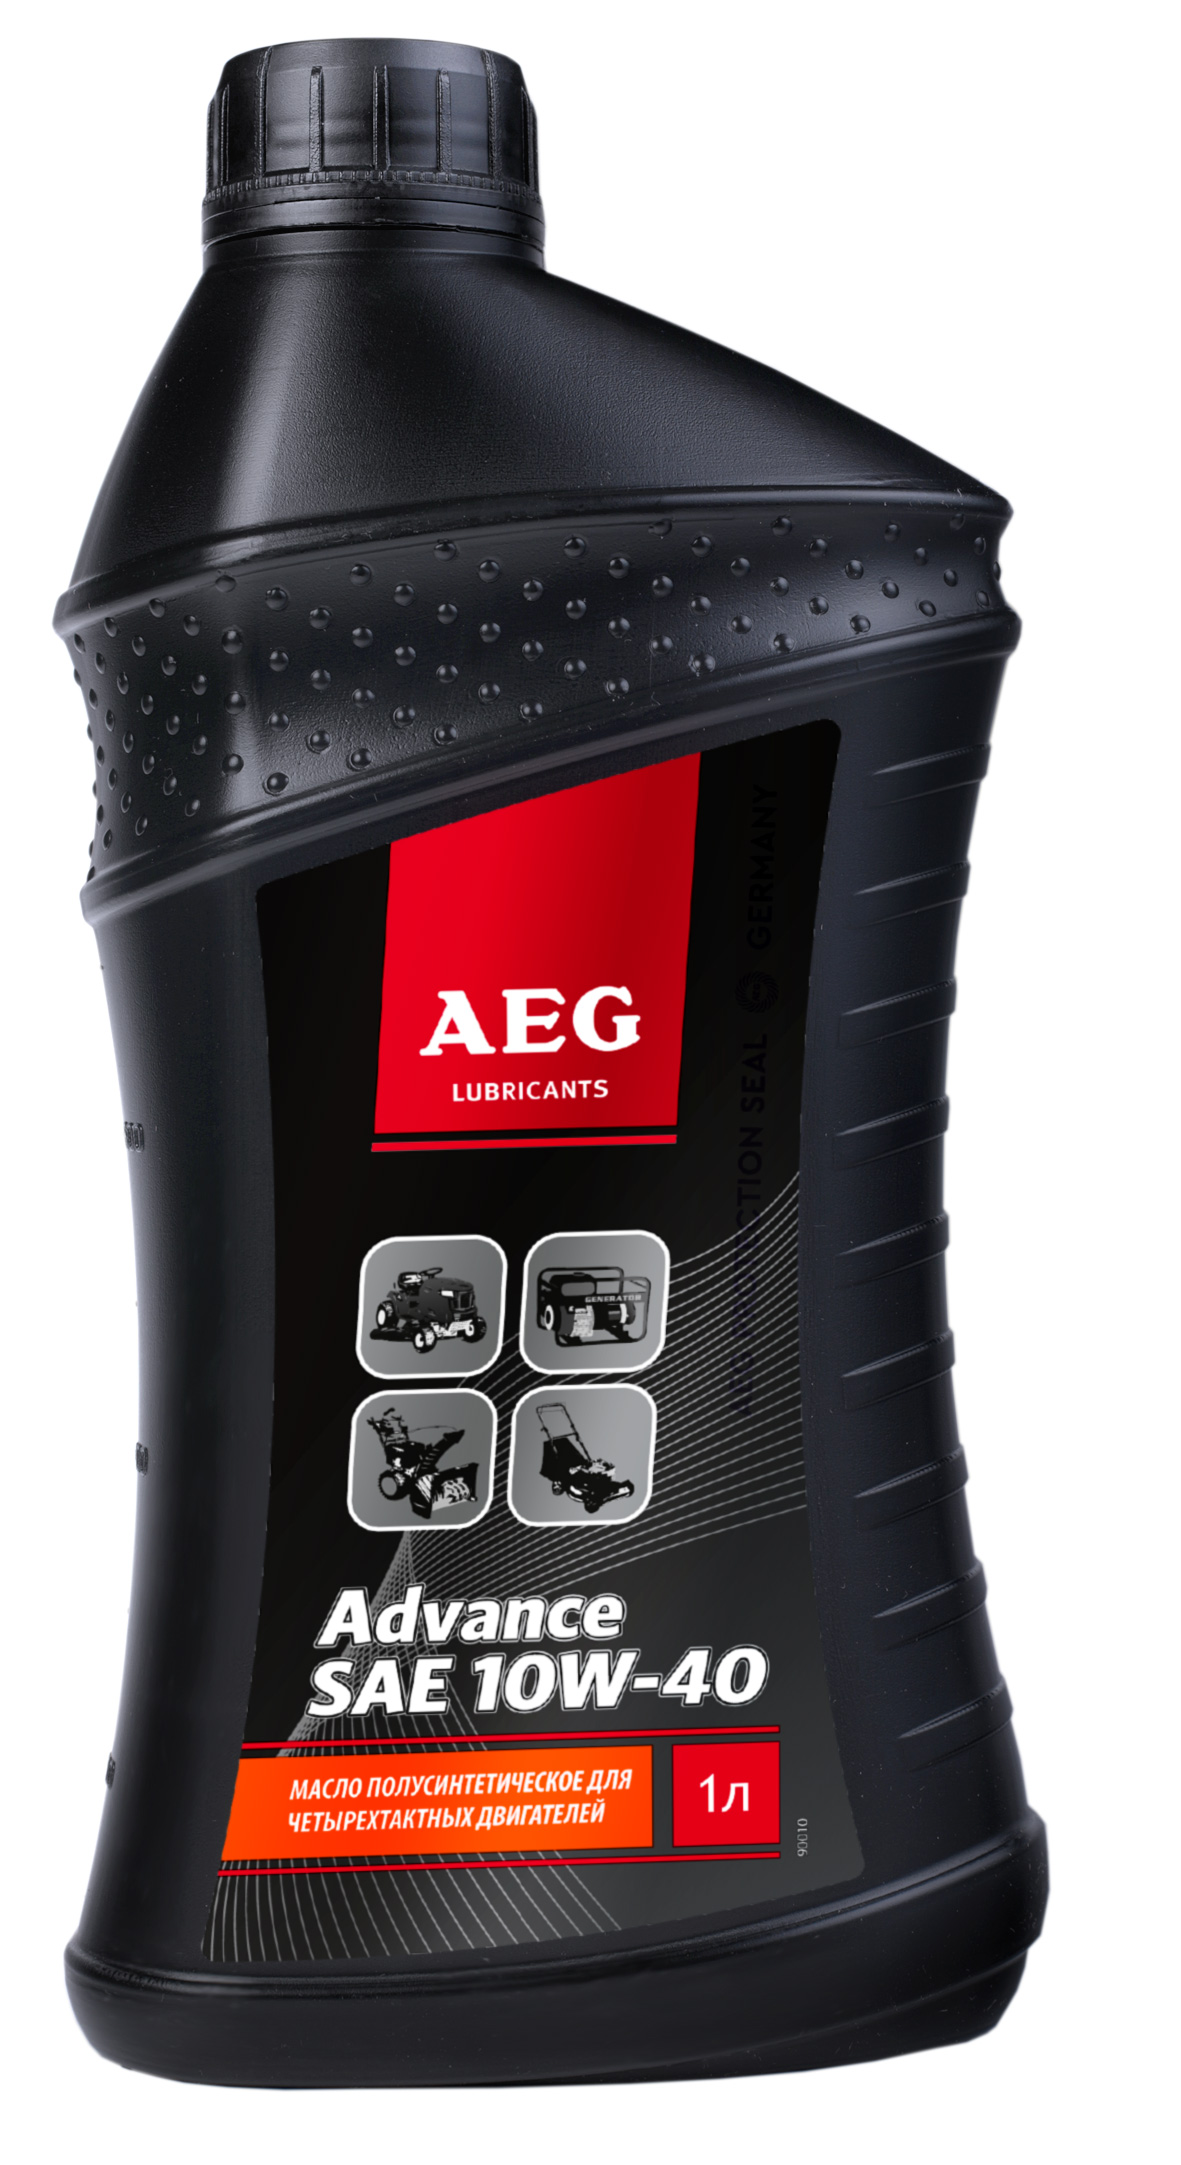 Масло api ch. AEG Universal 2t Motor Oil API TC масло 2т мин. 1л. Compressor Premium Oil ISO VG-100. Масло АЕГ для двухтактных двигателей.